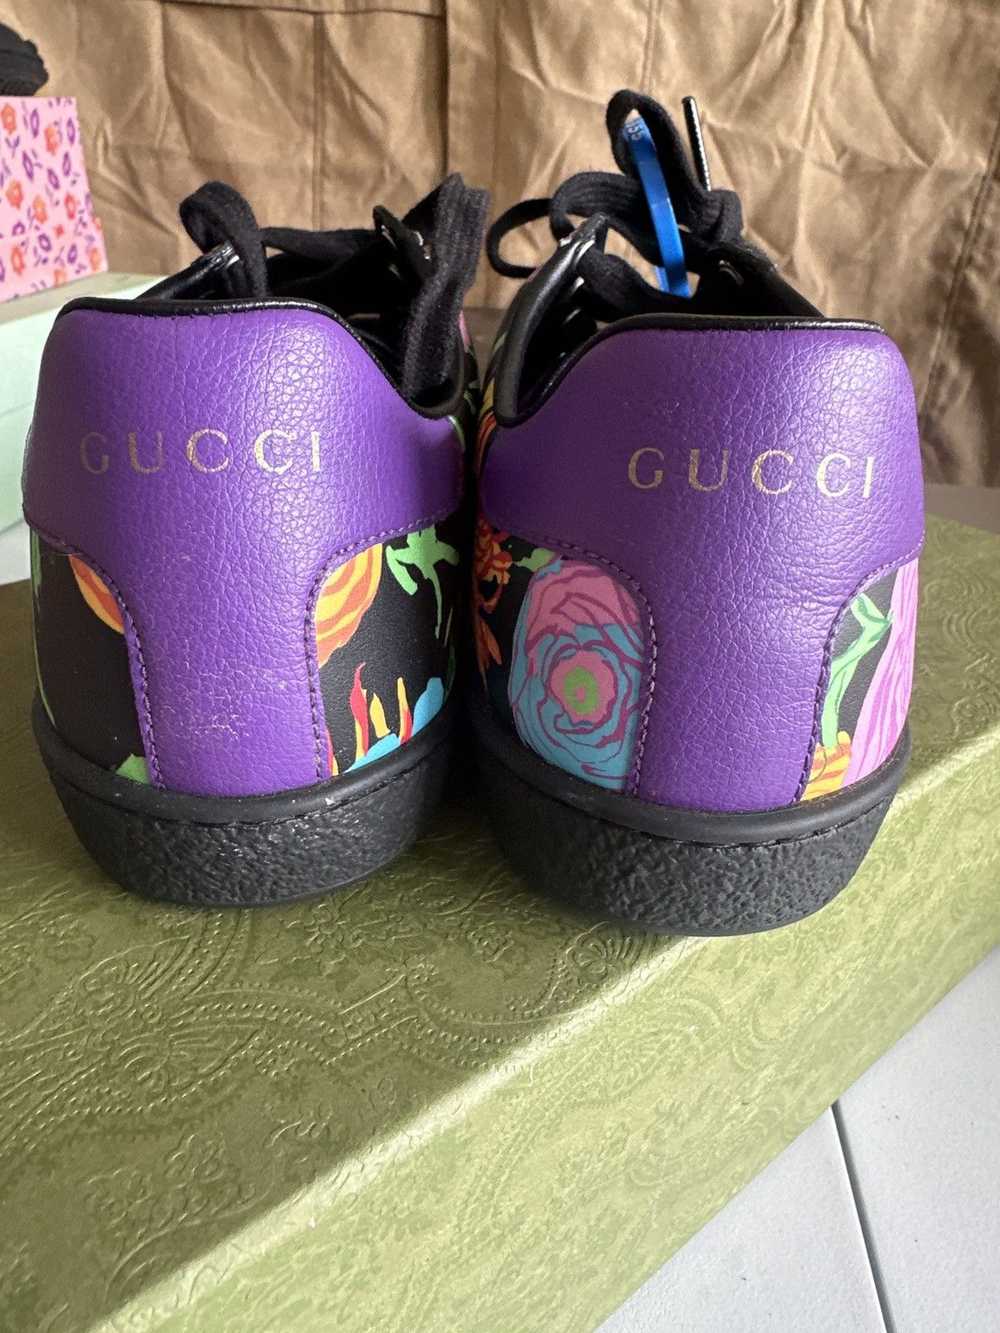 Gucci Gucci Ken Scott Ace Sneakers - image 4